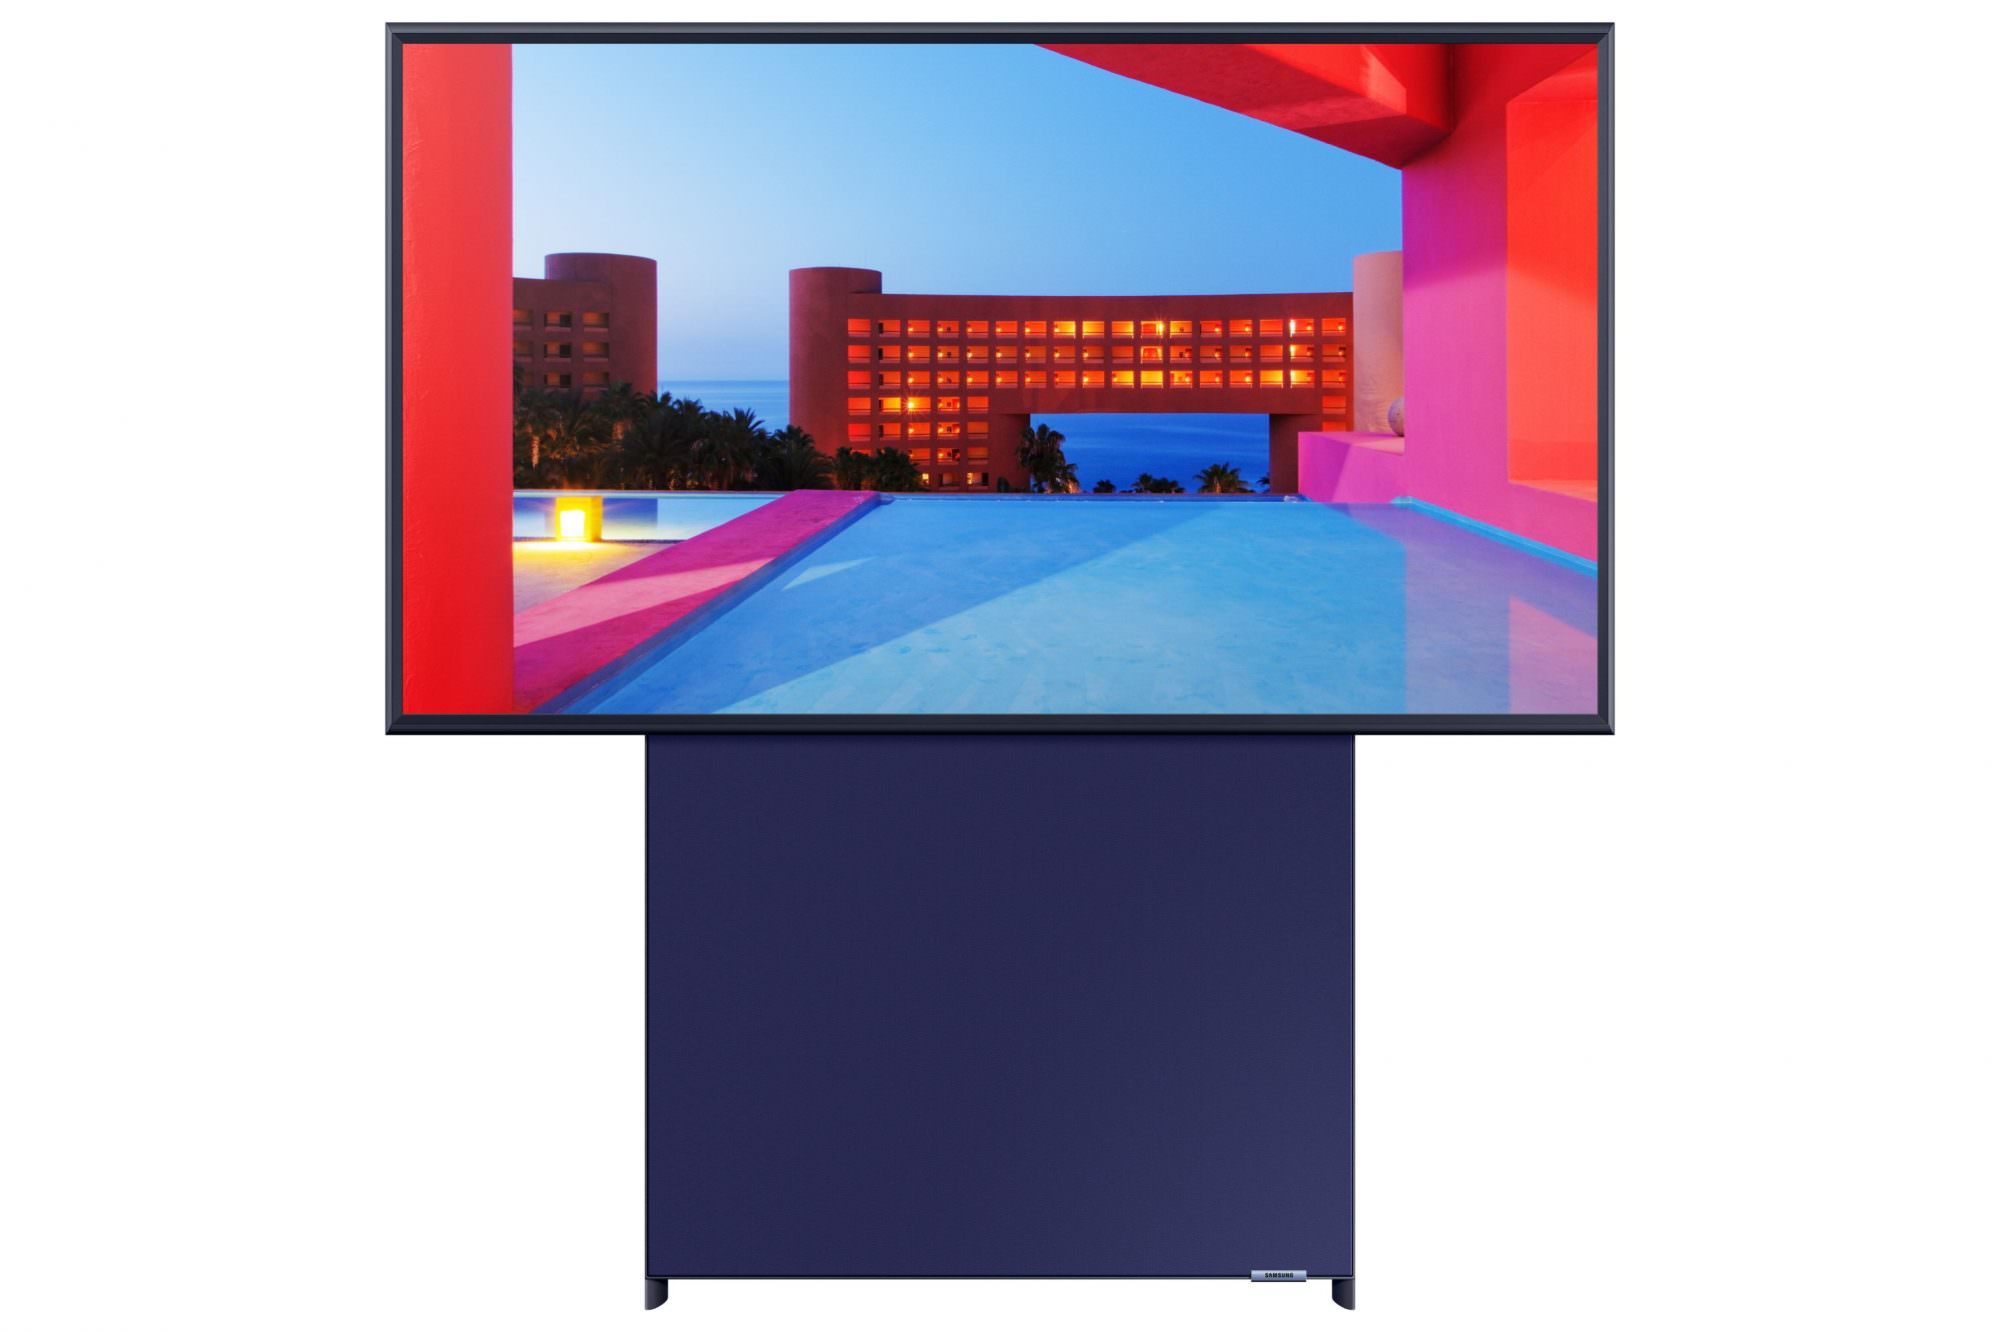 Samsung เปิดไลน์อัพทีวีใหม่ ในงาน CES 2020 จอ MicroLED สำหรับใช้ในบ้าน และ Sero ทีวีหมุนจอได้ 9